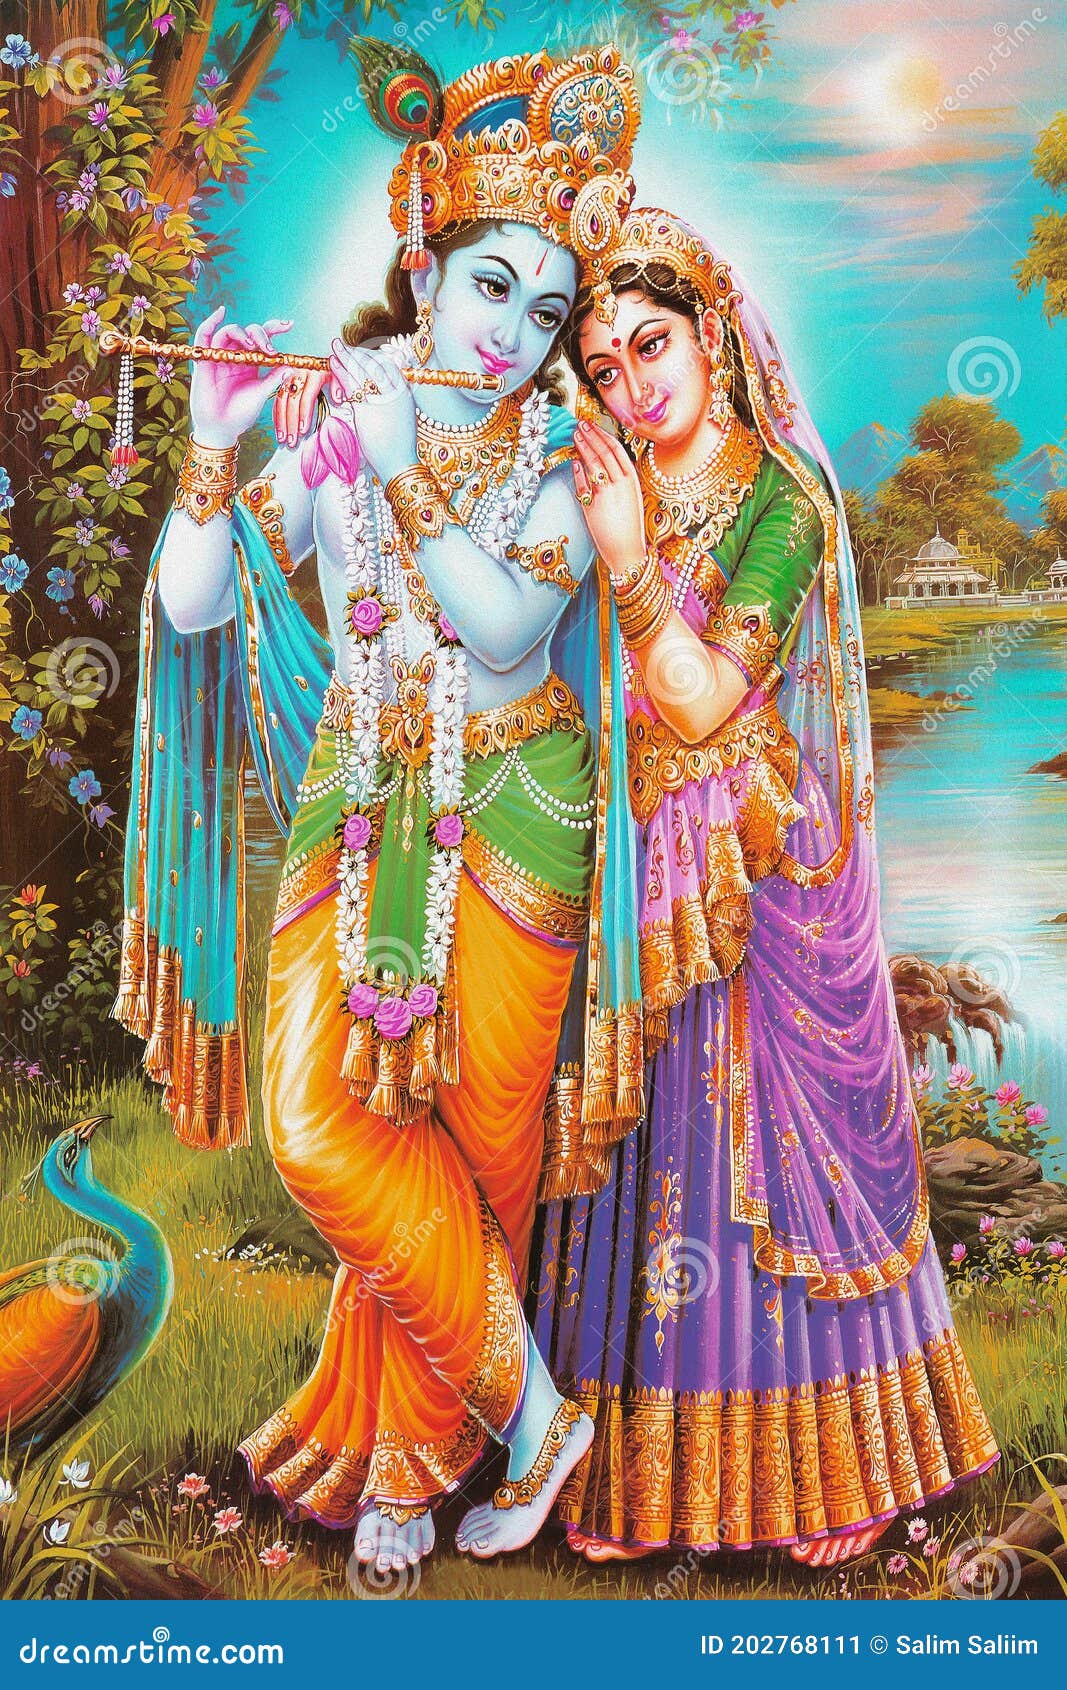 320x480 mobile wallpapers|Lord Krishna Mobile Wallpaper